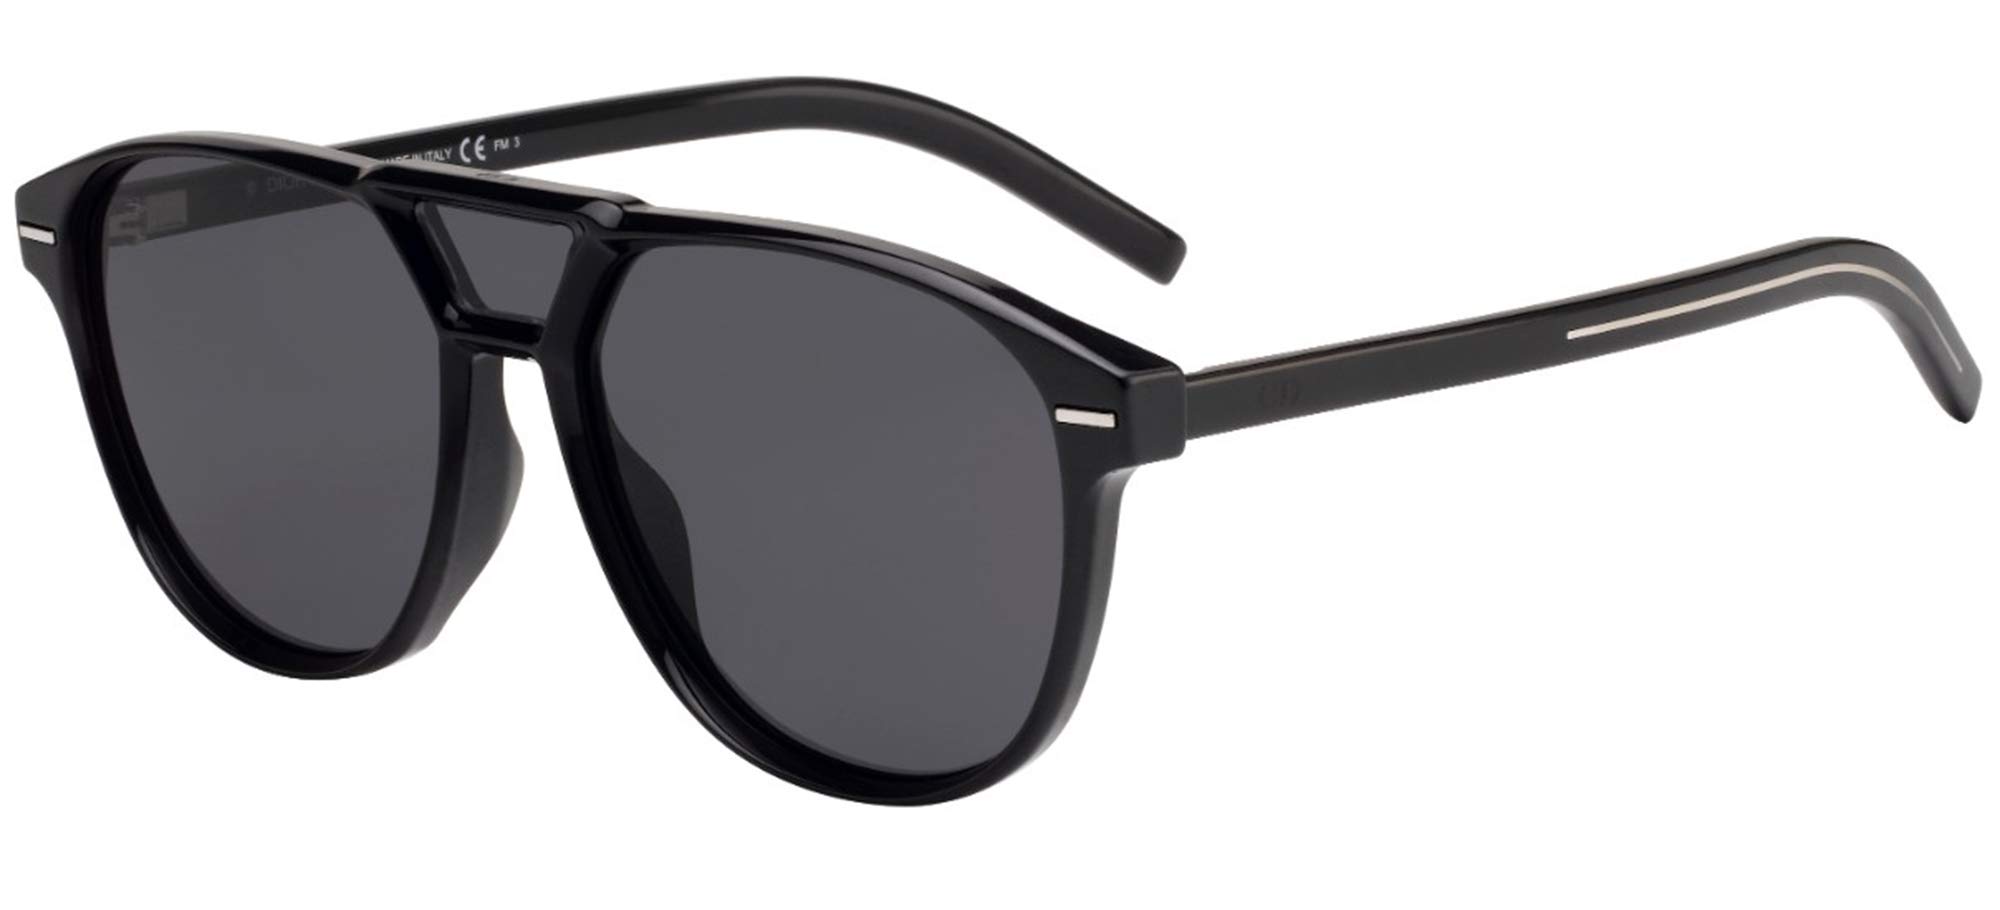 Dior Homme BLACKTIE 219S 807 2K 49 Prescription Sunglasses  Glasses Station